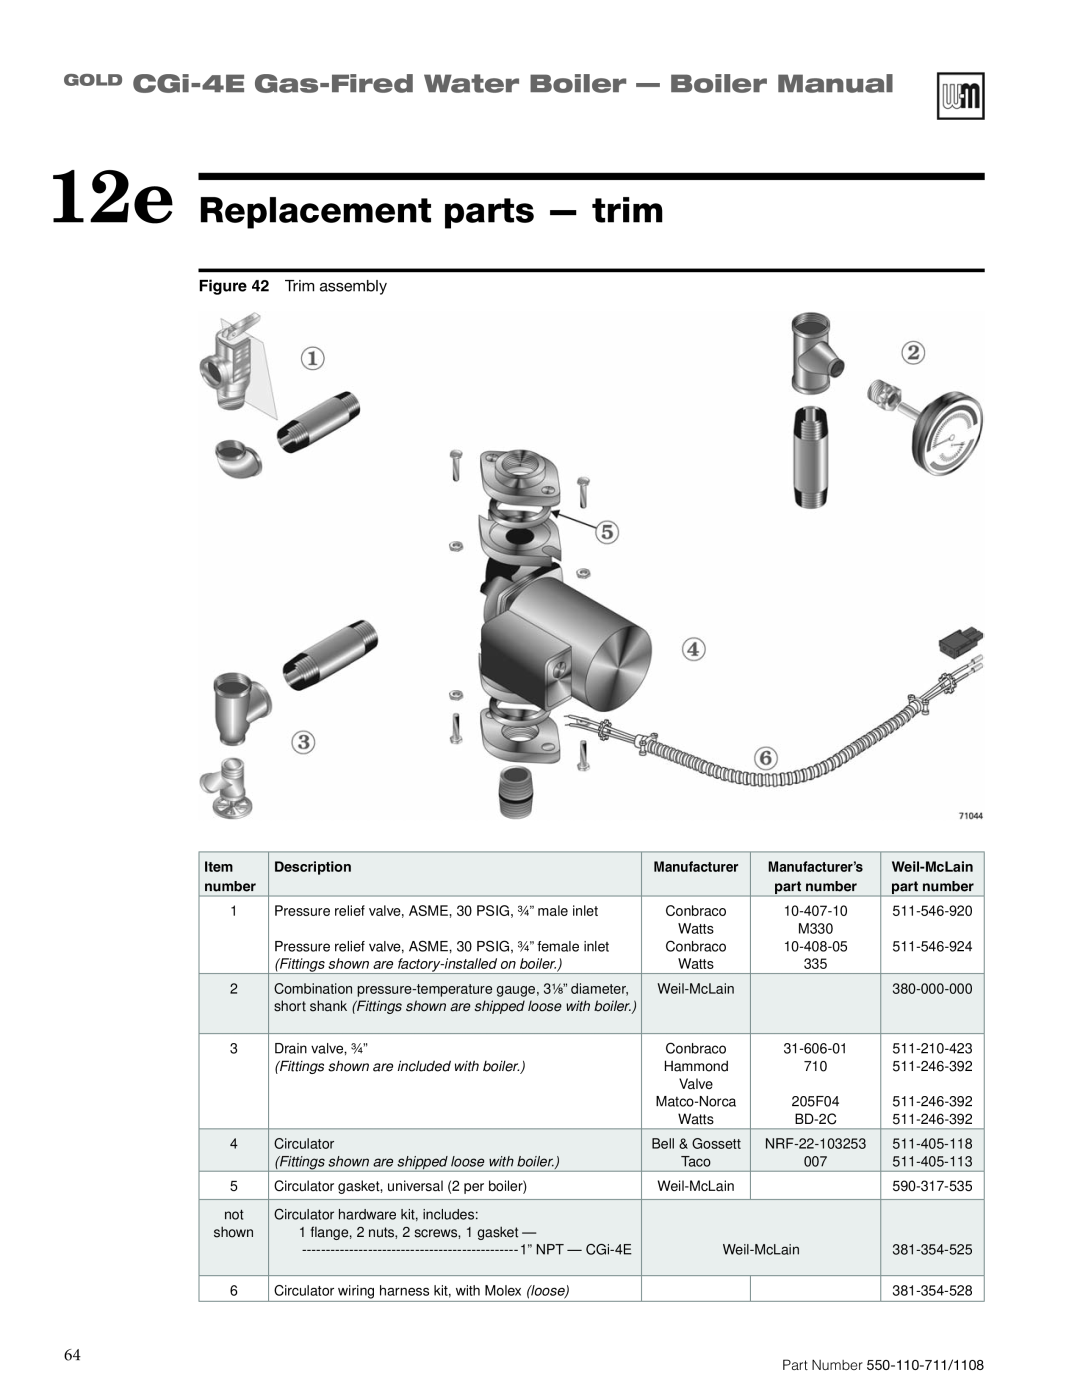 Weil-McLain CGI-4E 12e Replacement parts - trim, GOLD CGi-4E Gas-FiredWater Boiler - Boiler Manual, Description, number 